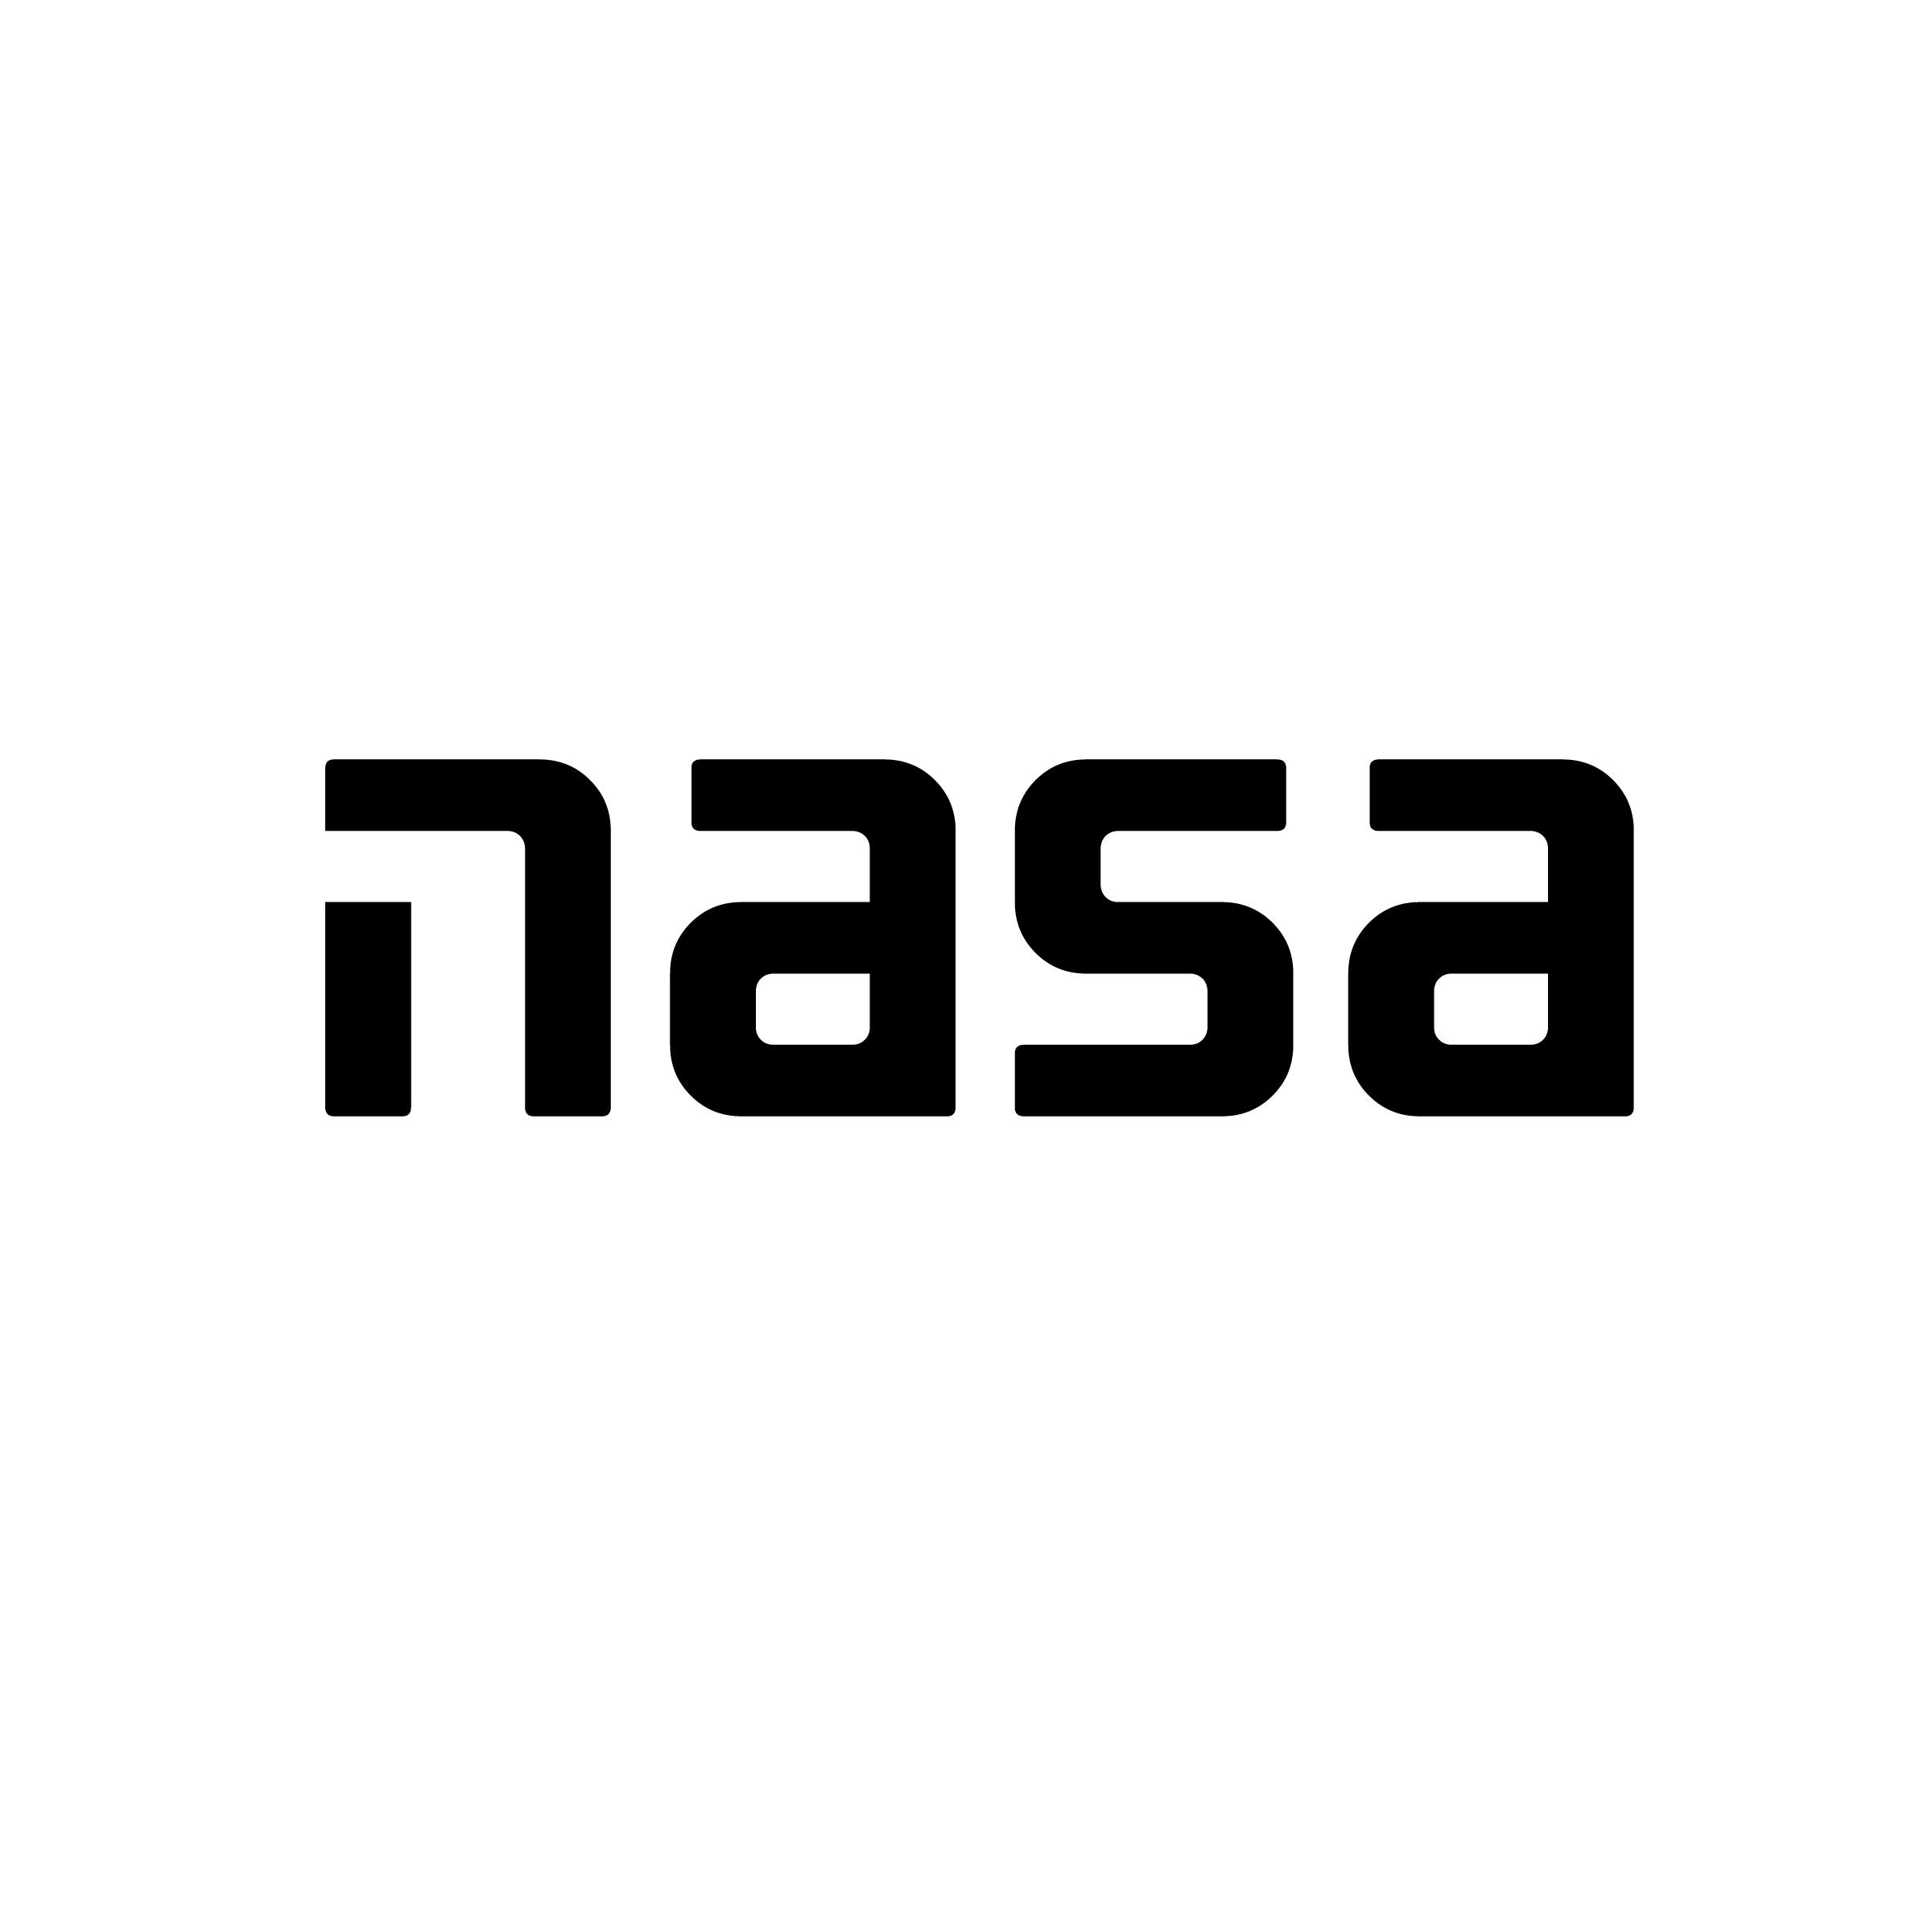 NASA logo redesign by Nick Myette at Coroflot.com